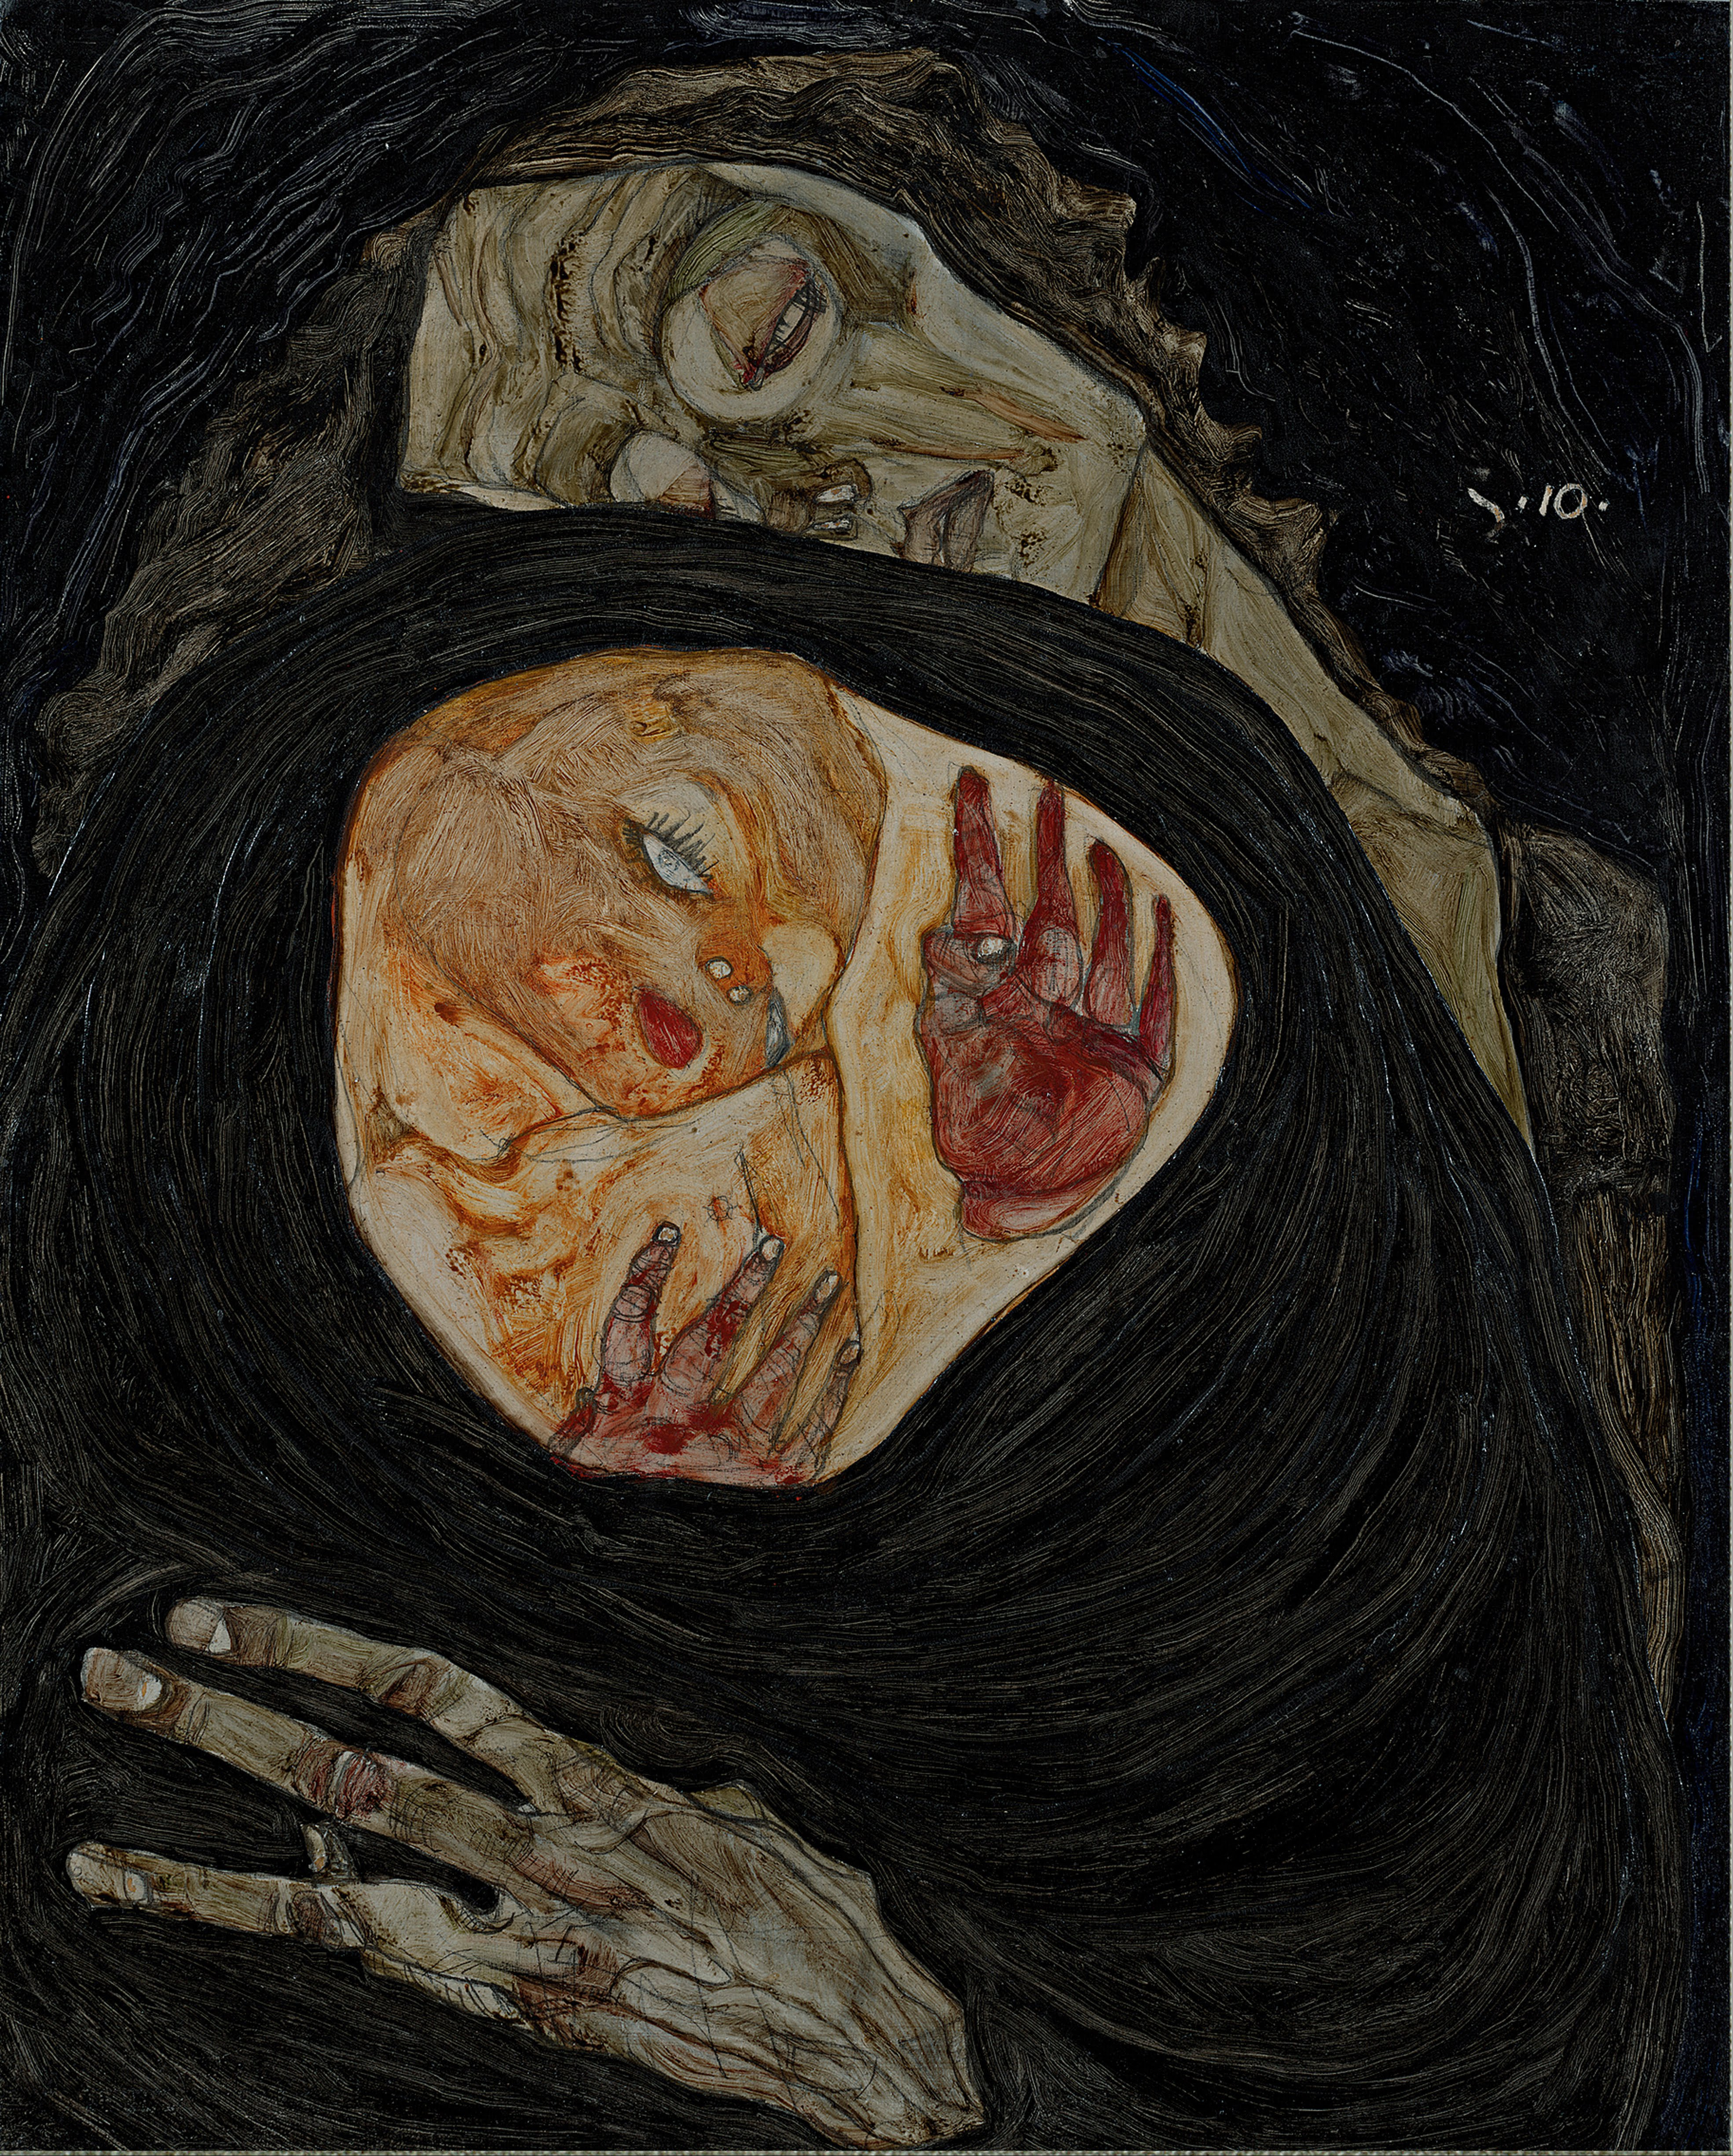 Dead Mother by Egon Schiele - c. 1910 - 32 x 25.7 cm private collection